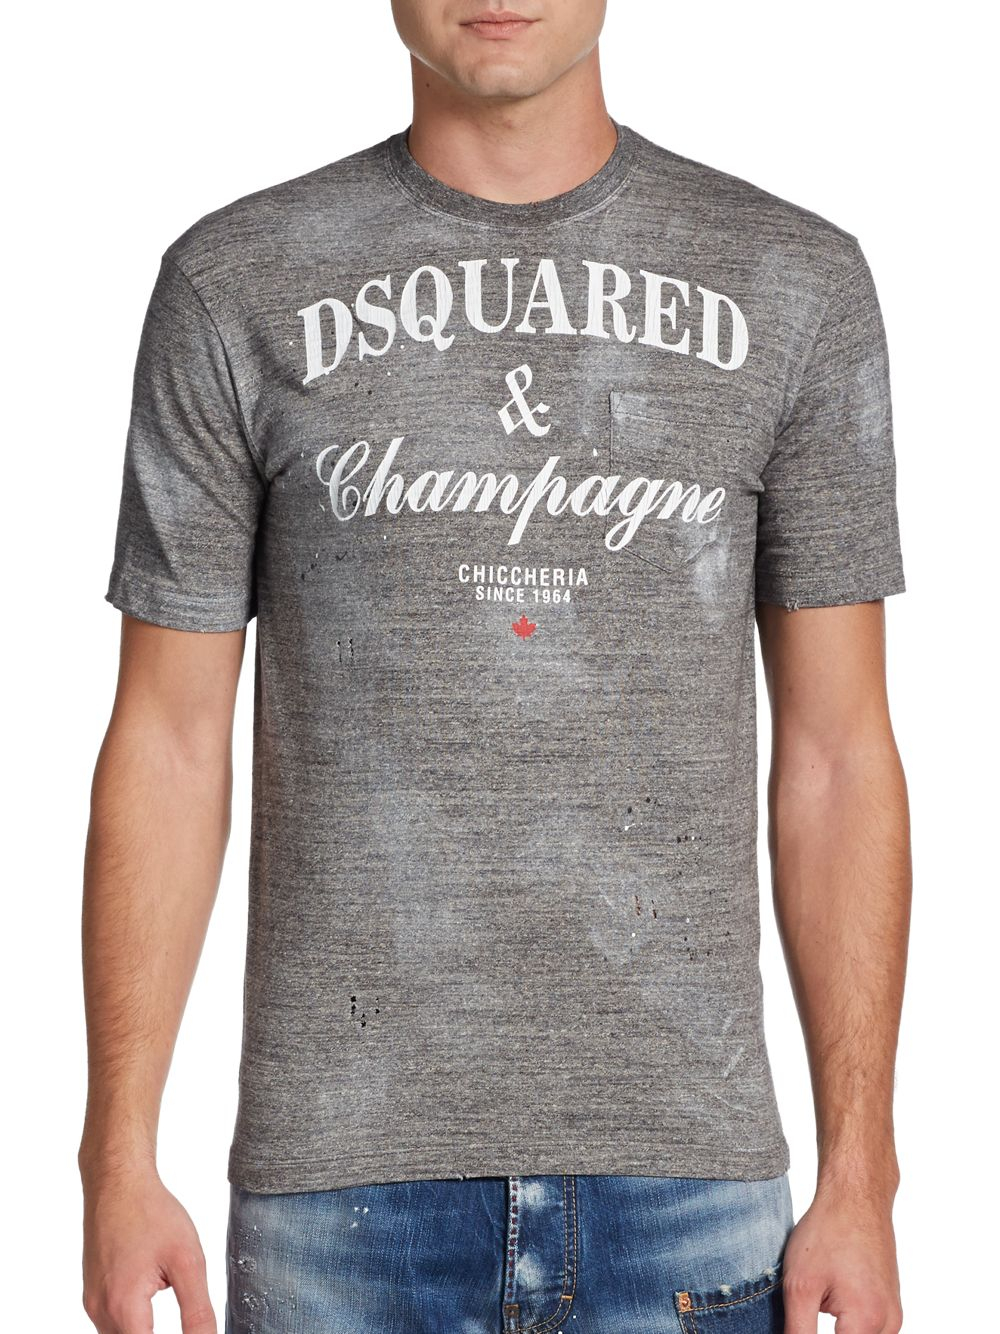 dsquared champagne t shirt